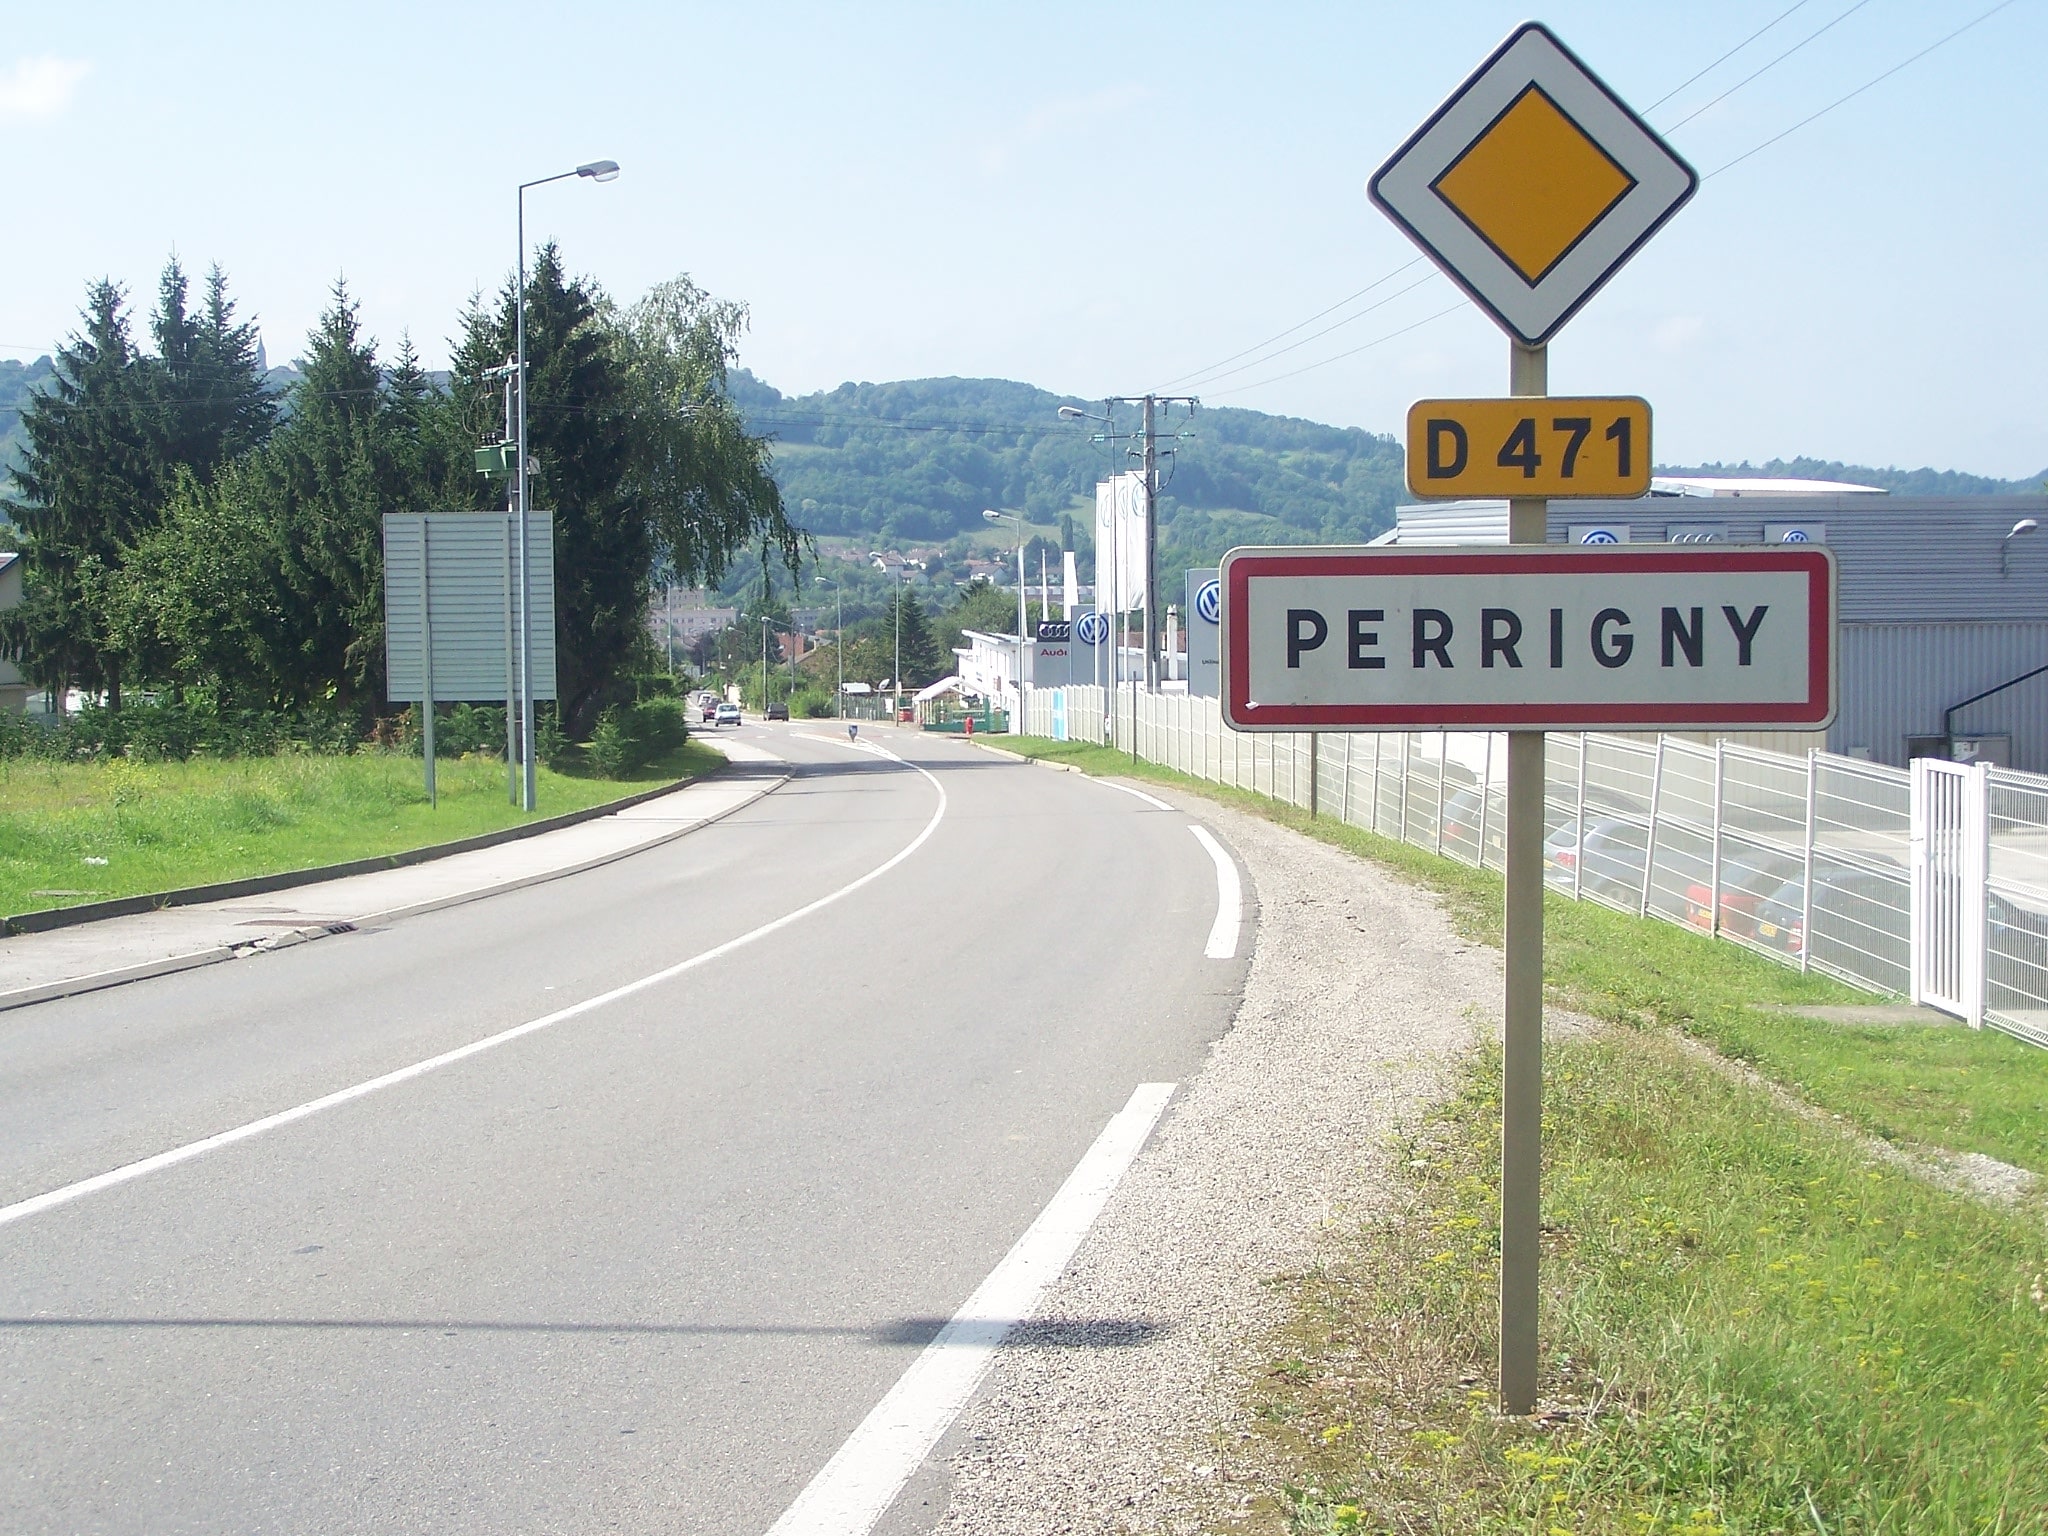 Perrigny, France